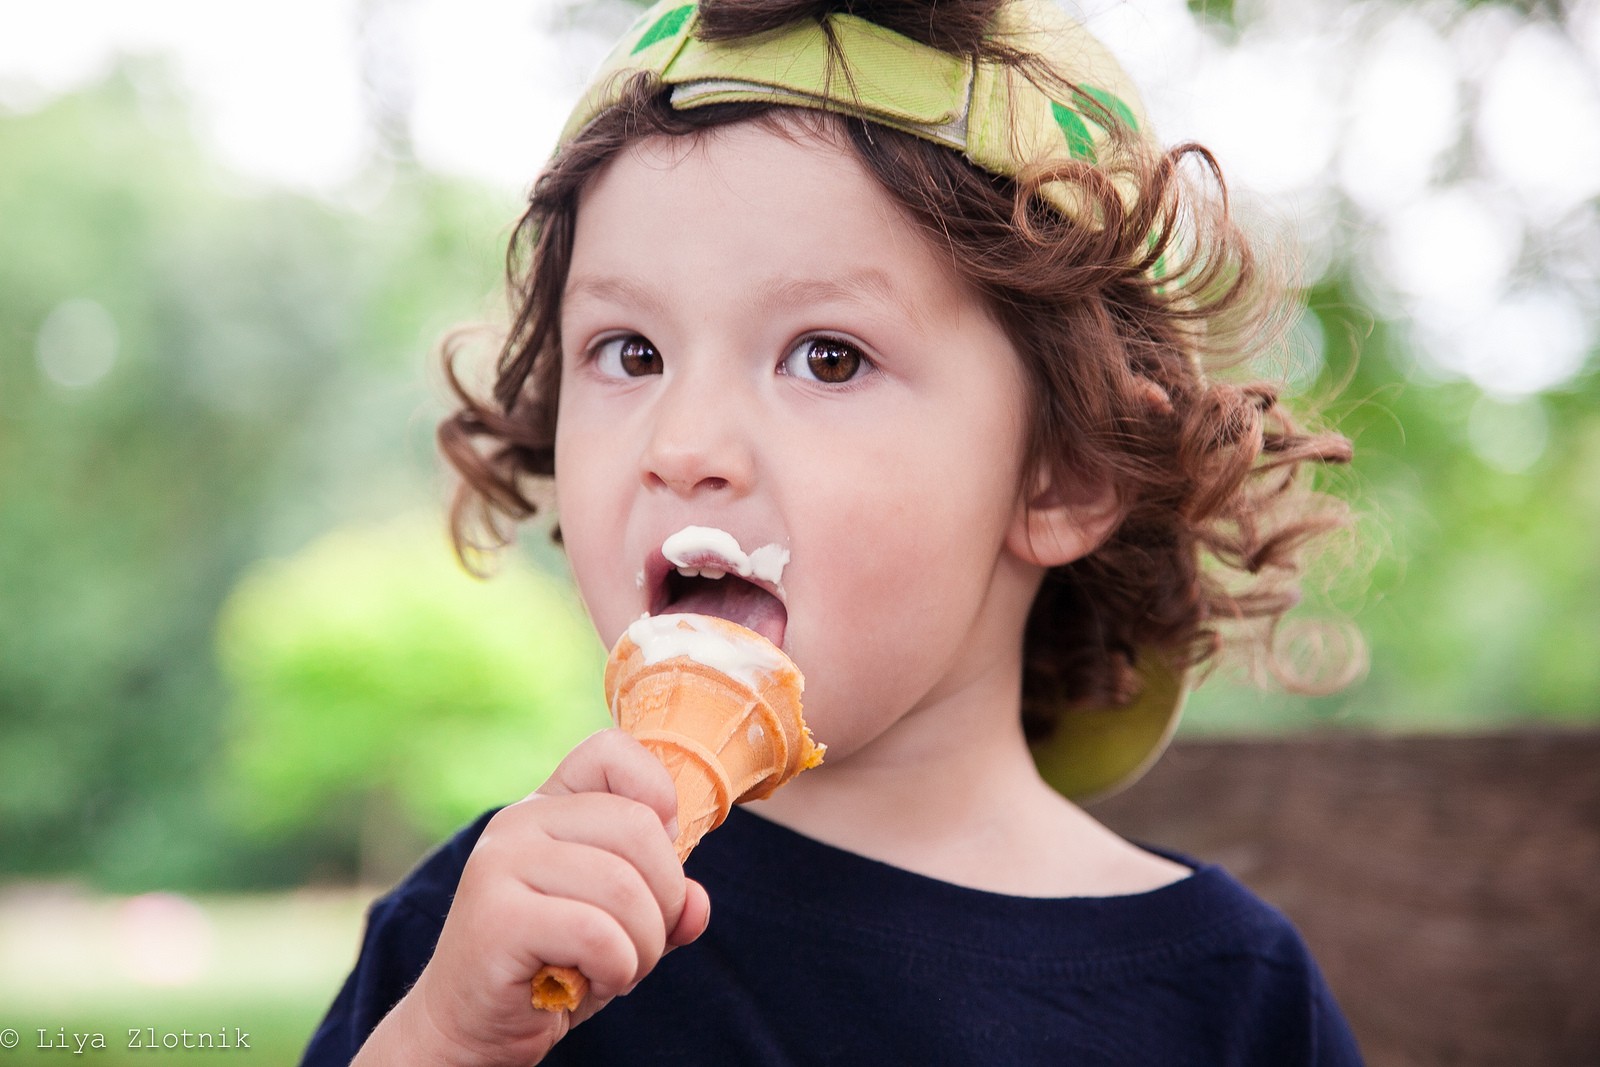 boy-eating-ice-cream-london-photo.jpg